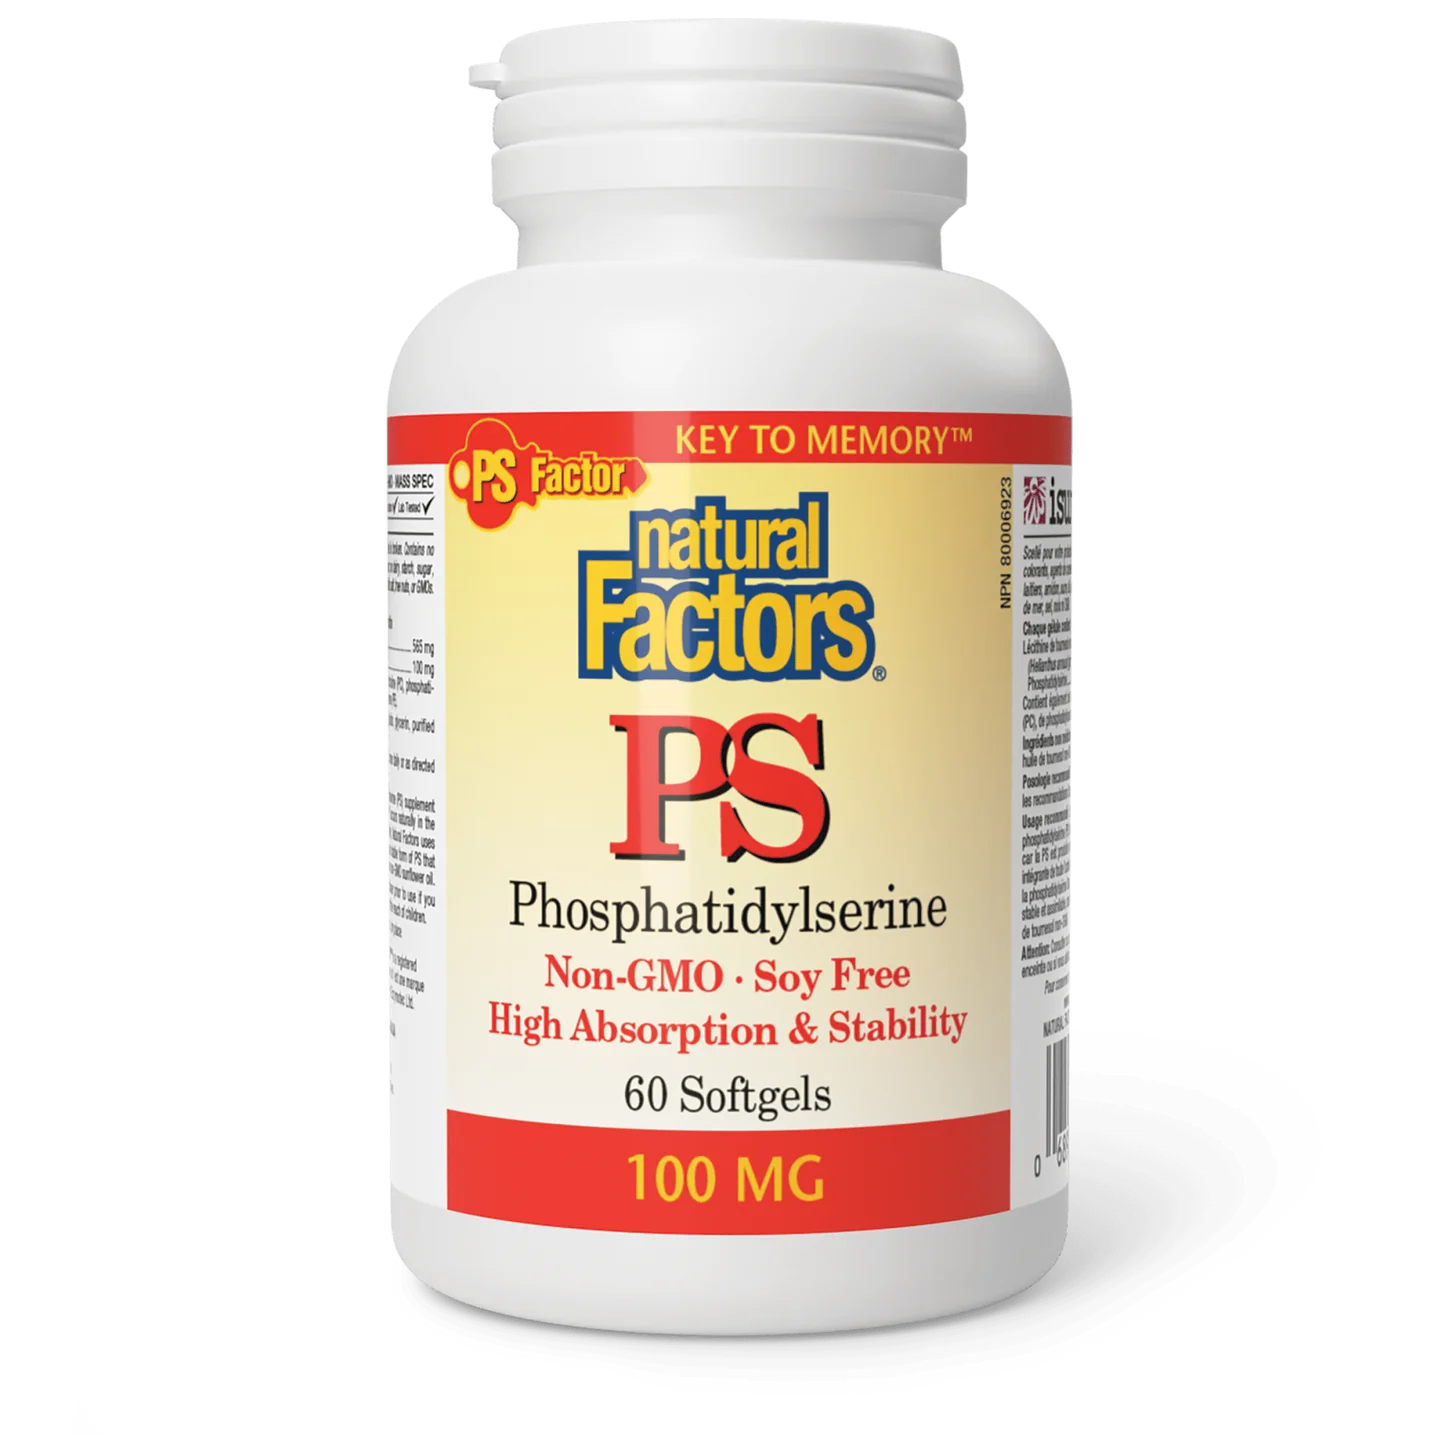 Natural Factors PS Phosphatidylserine 100 mg (60 softgels)